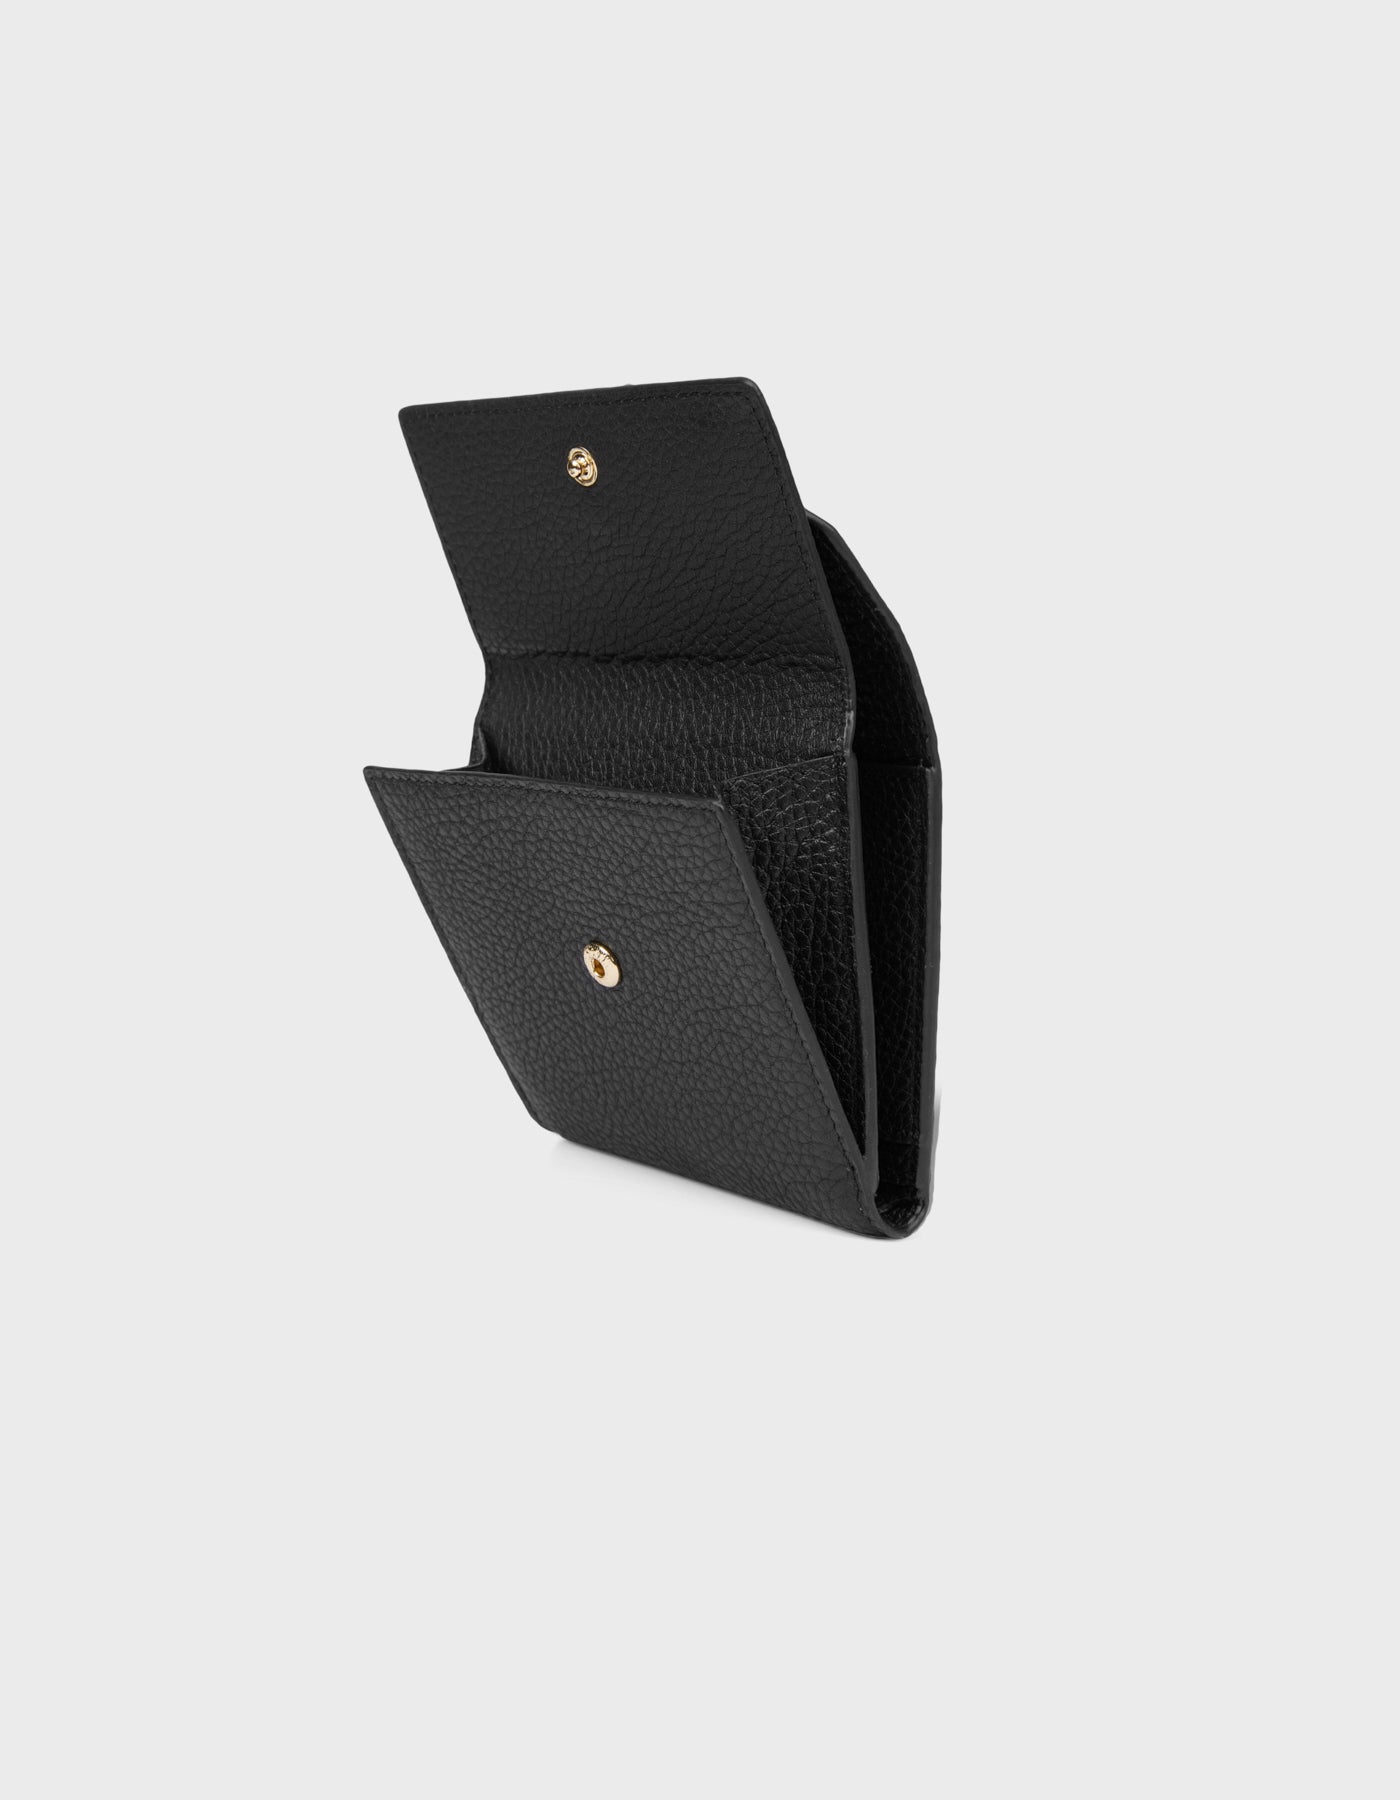 HiVa Atelier | Larus Compact Wallet Black | Beautiful and Versatile